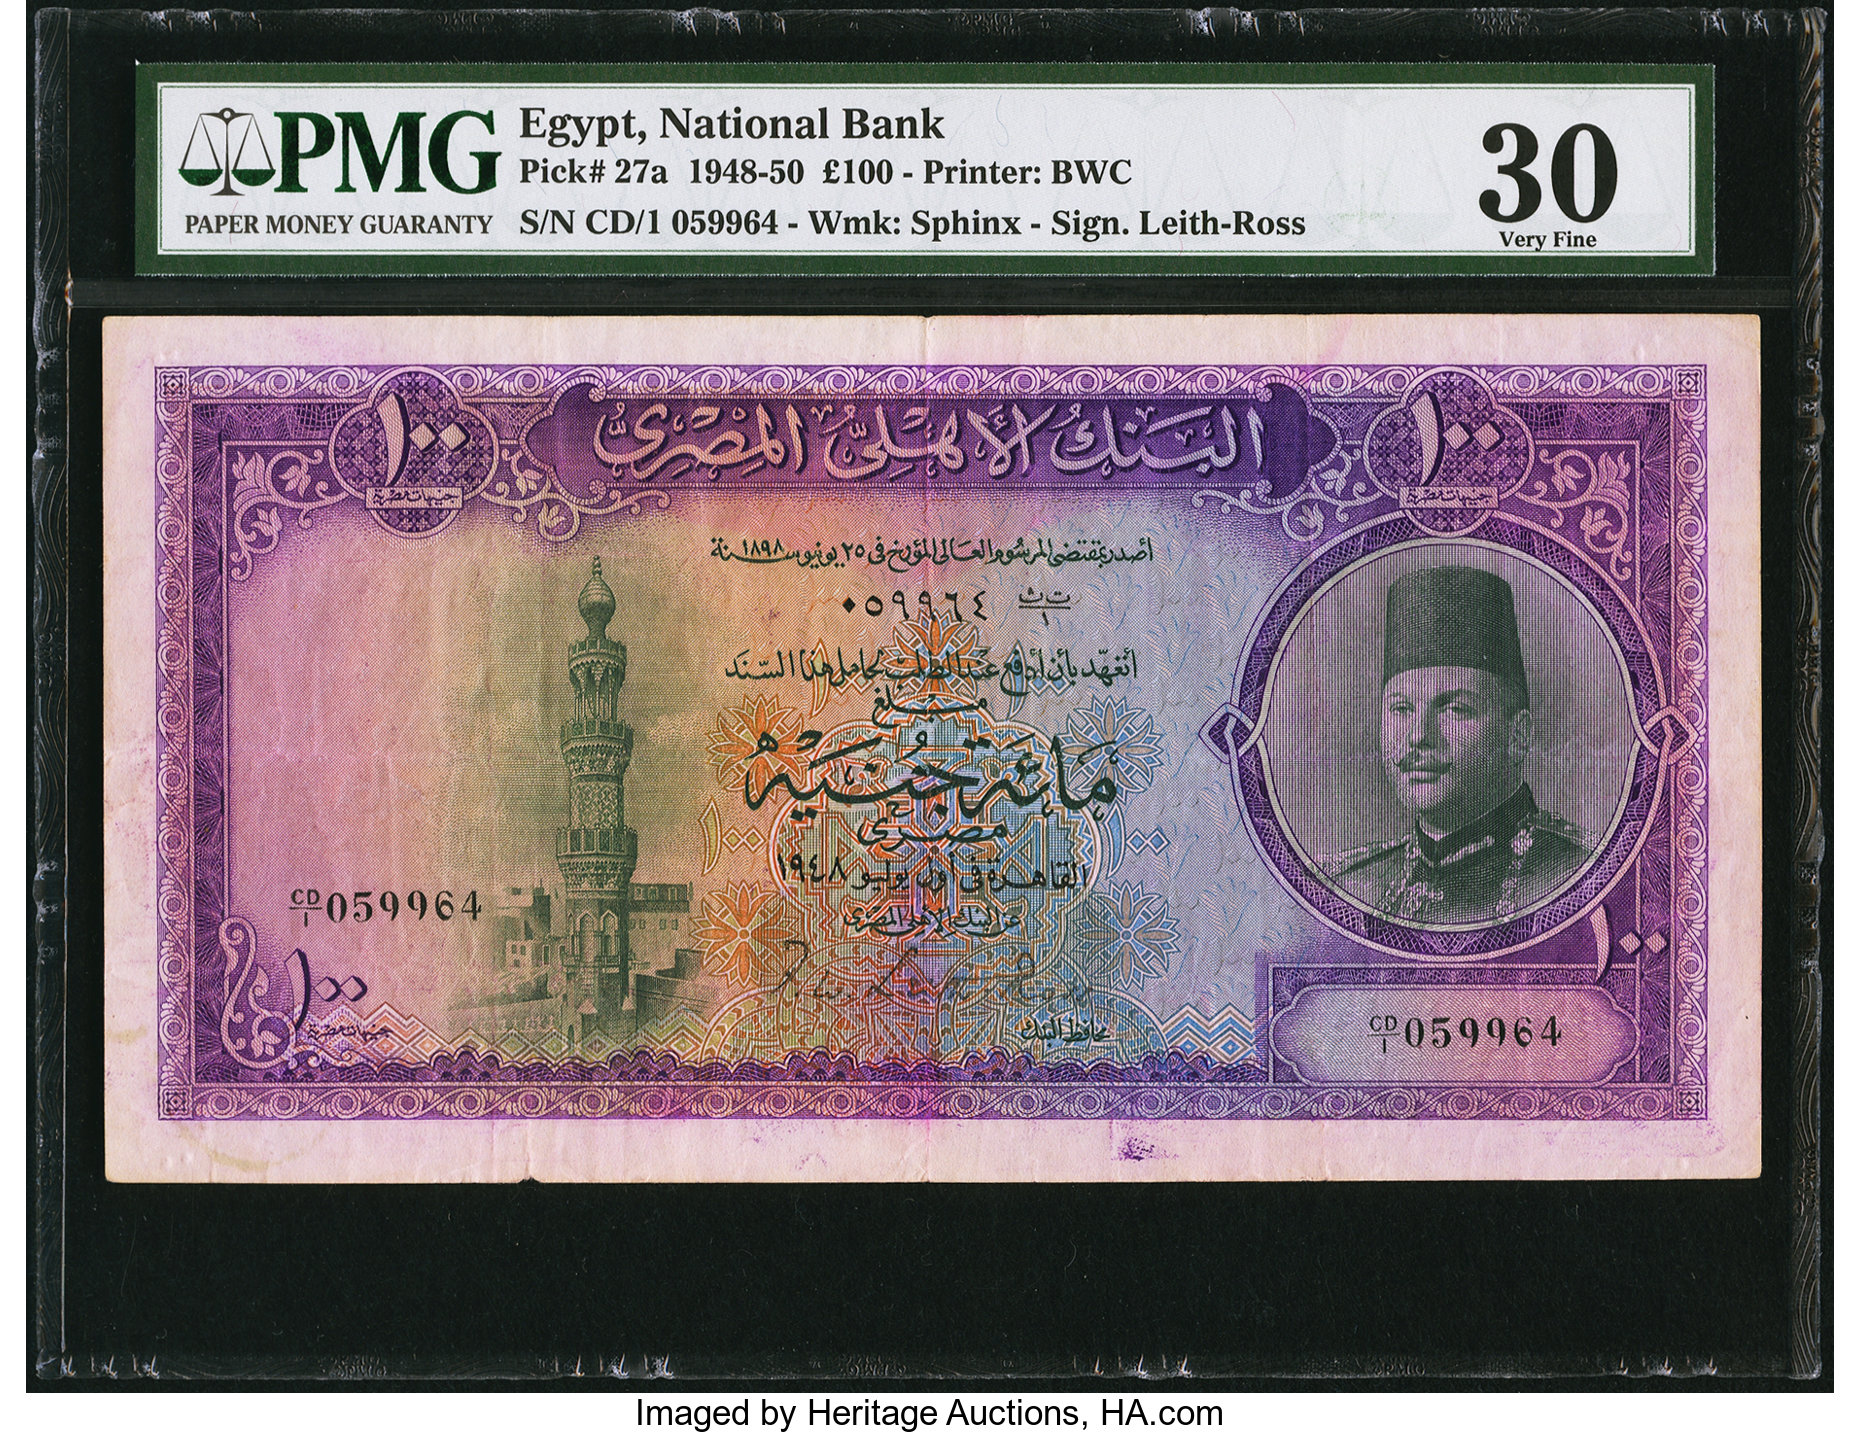 Egypt Bank Note, National Bank of Egypt, 100 Egyptian pounds 